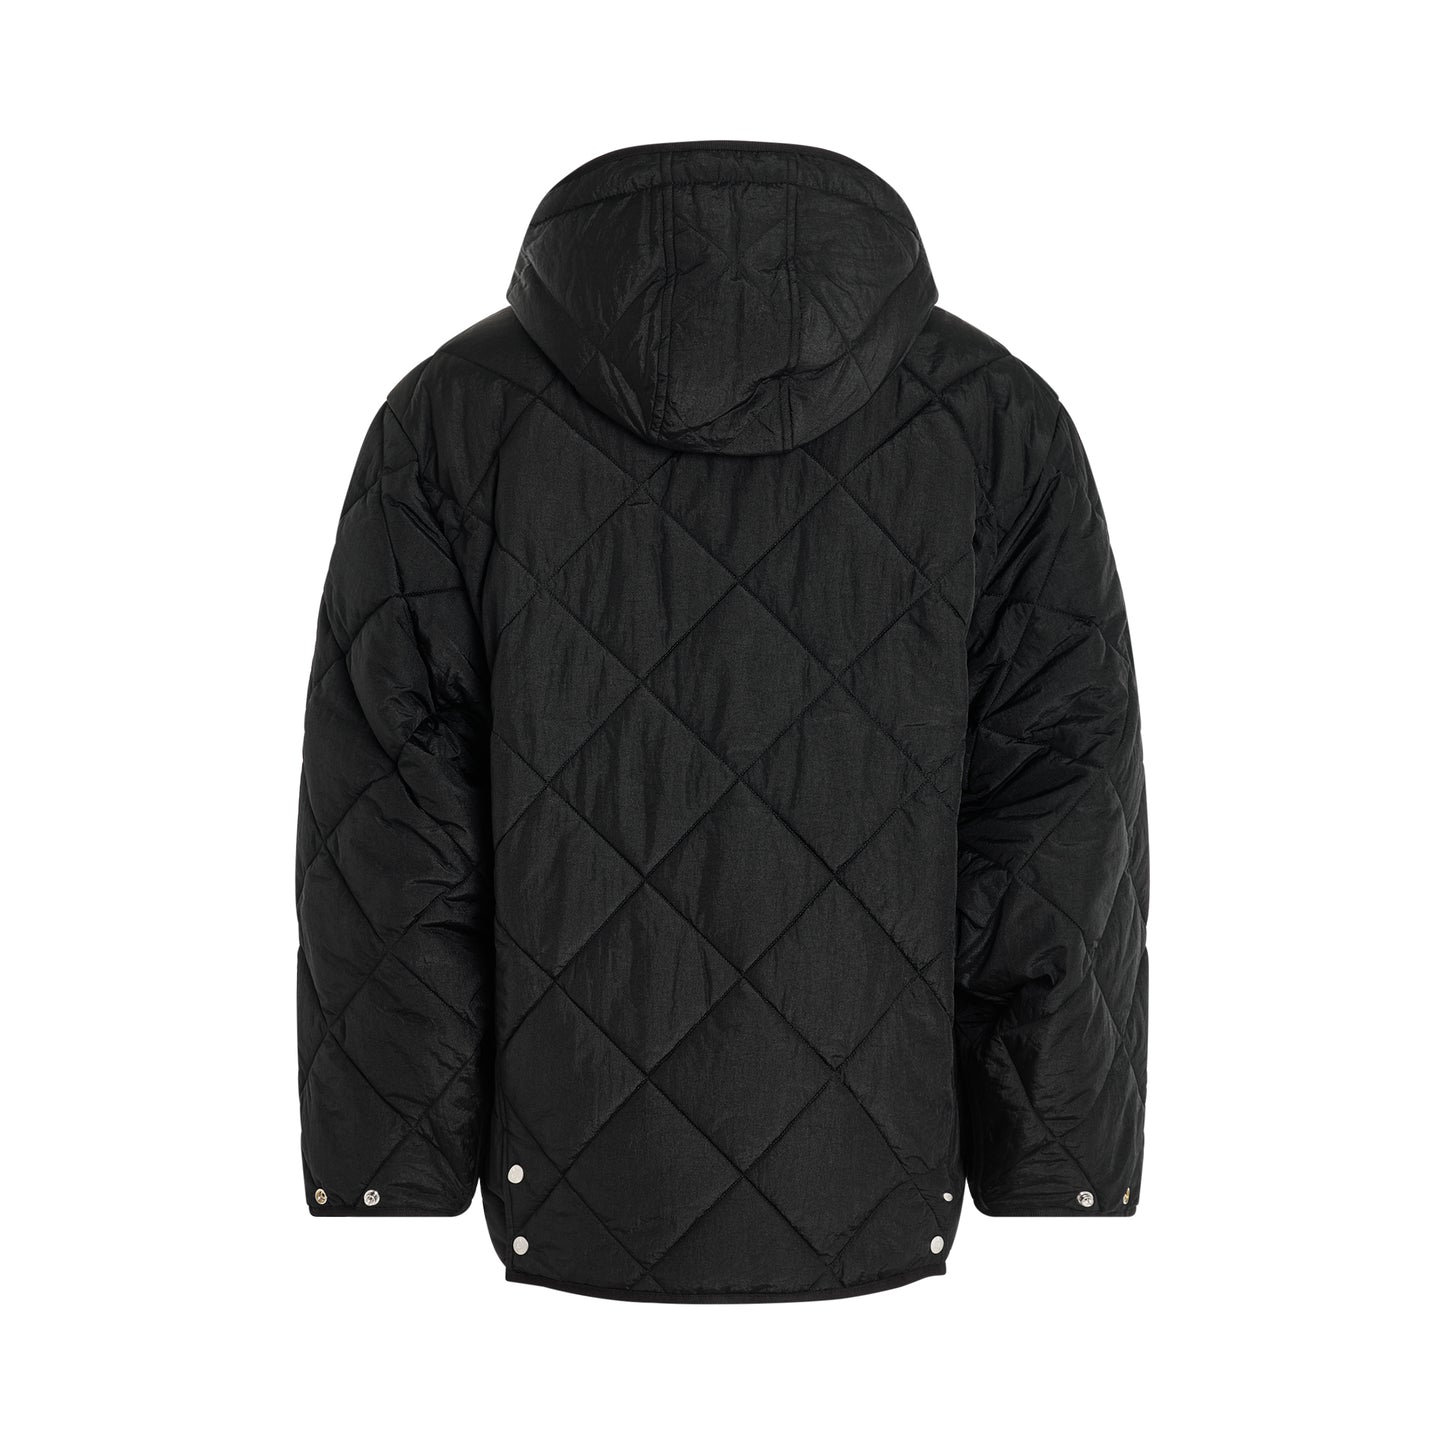 Quilted Liner Jacket in Black